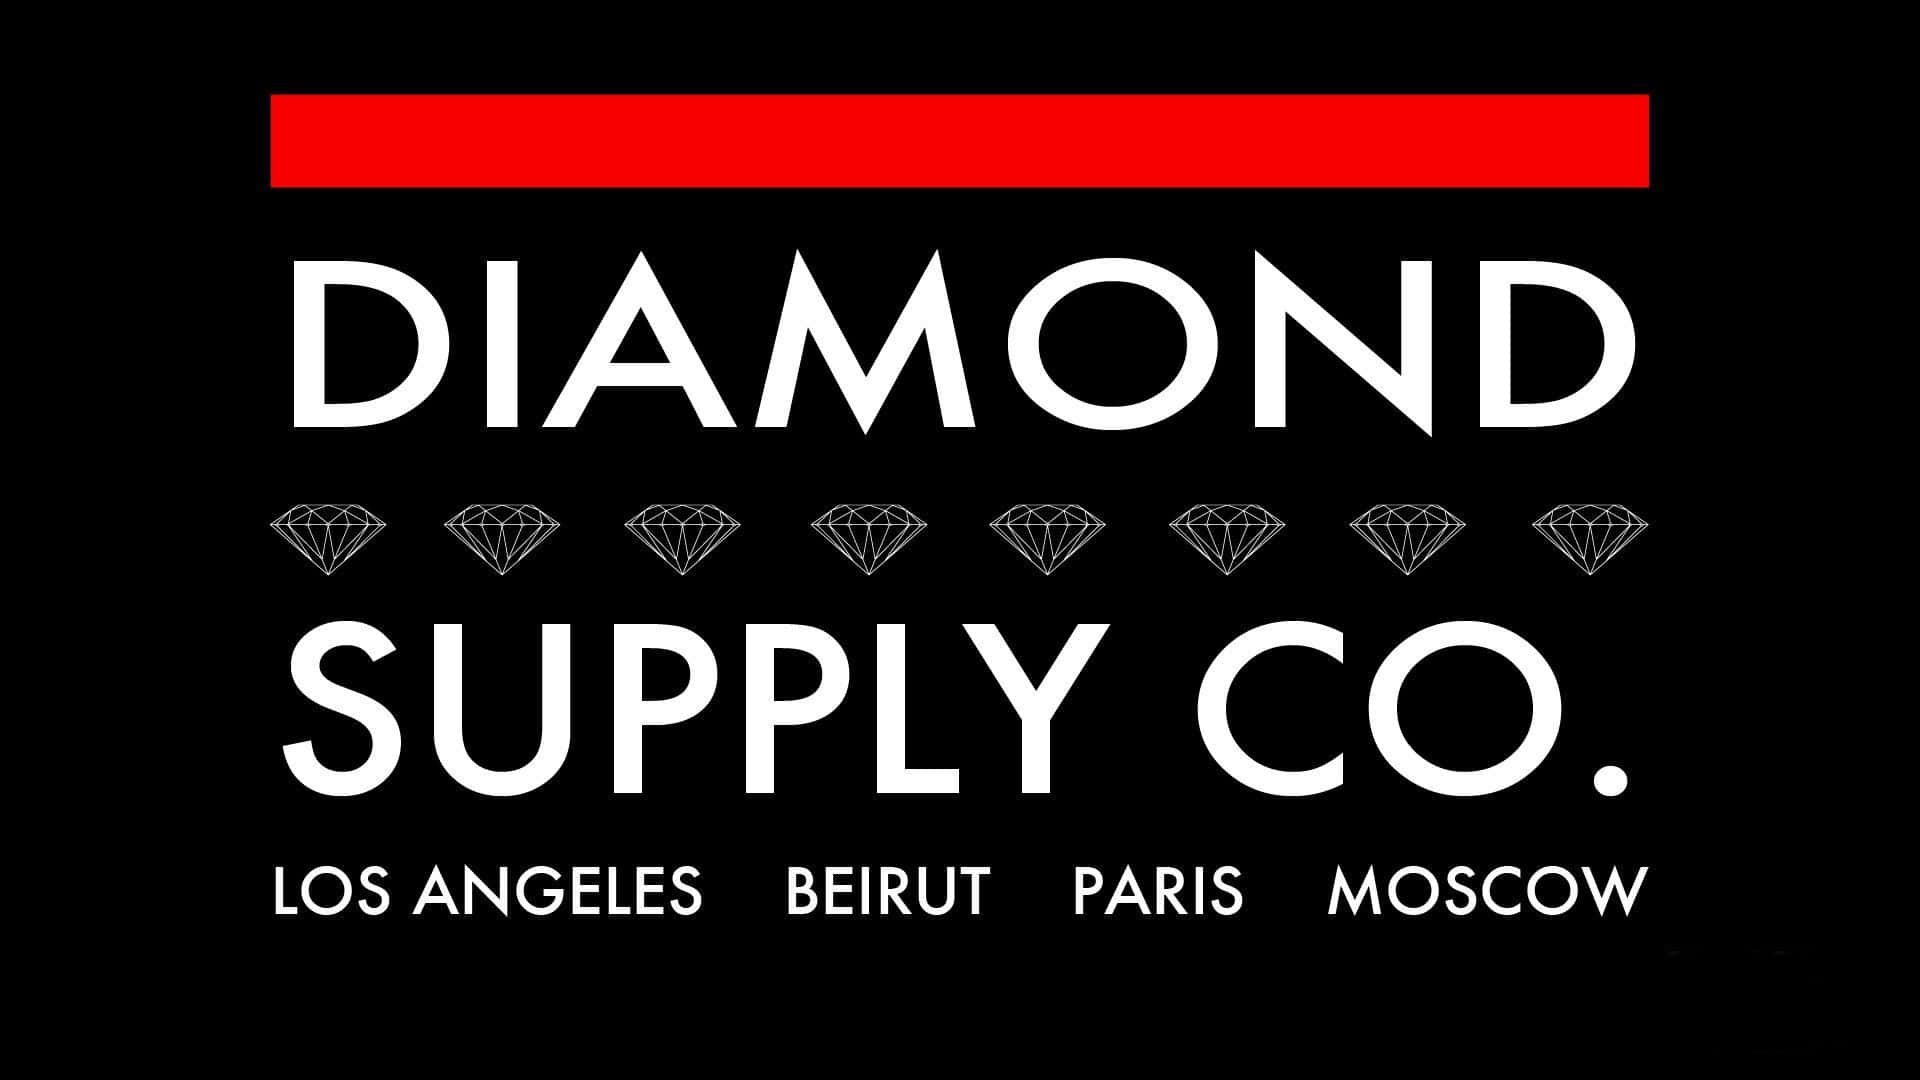 Diamantversorgungsgesellschafts-logo Wallpaper